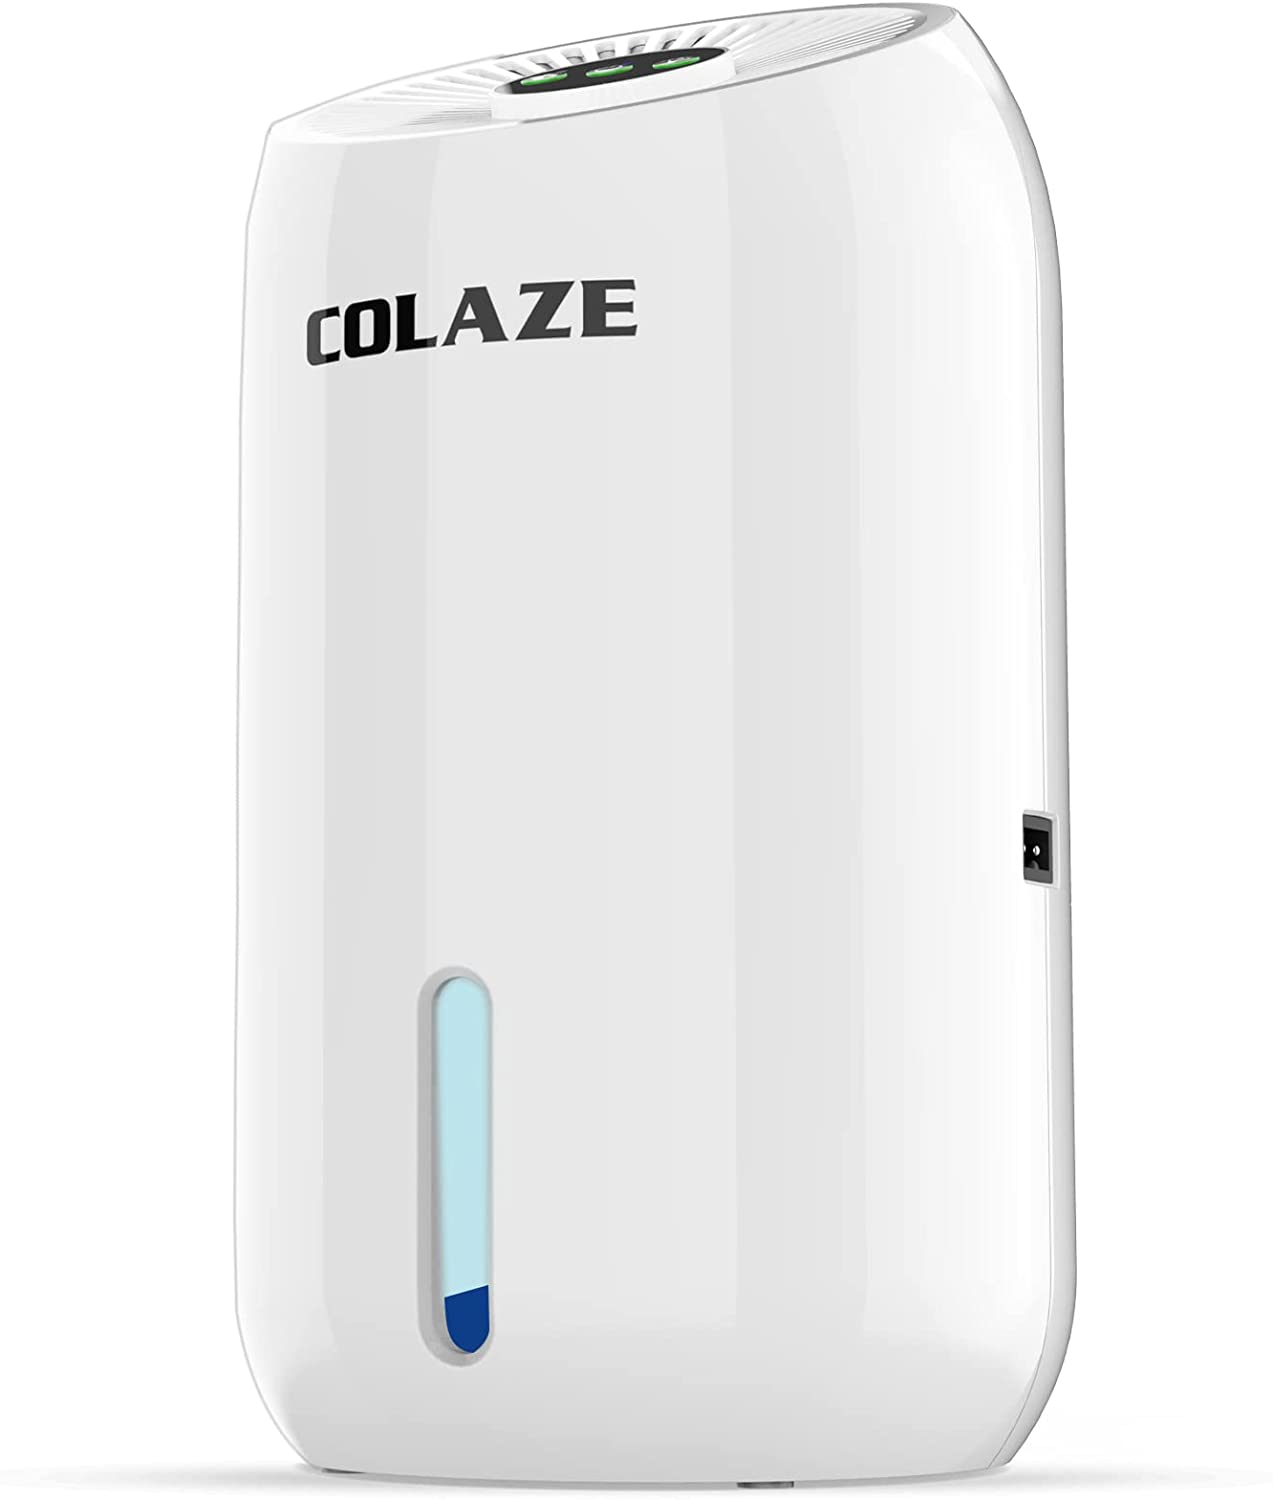 Colaze Portable Mini Dehumidifier